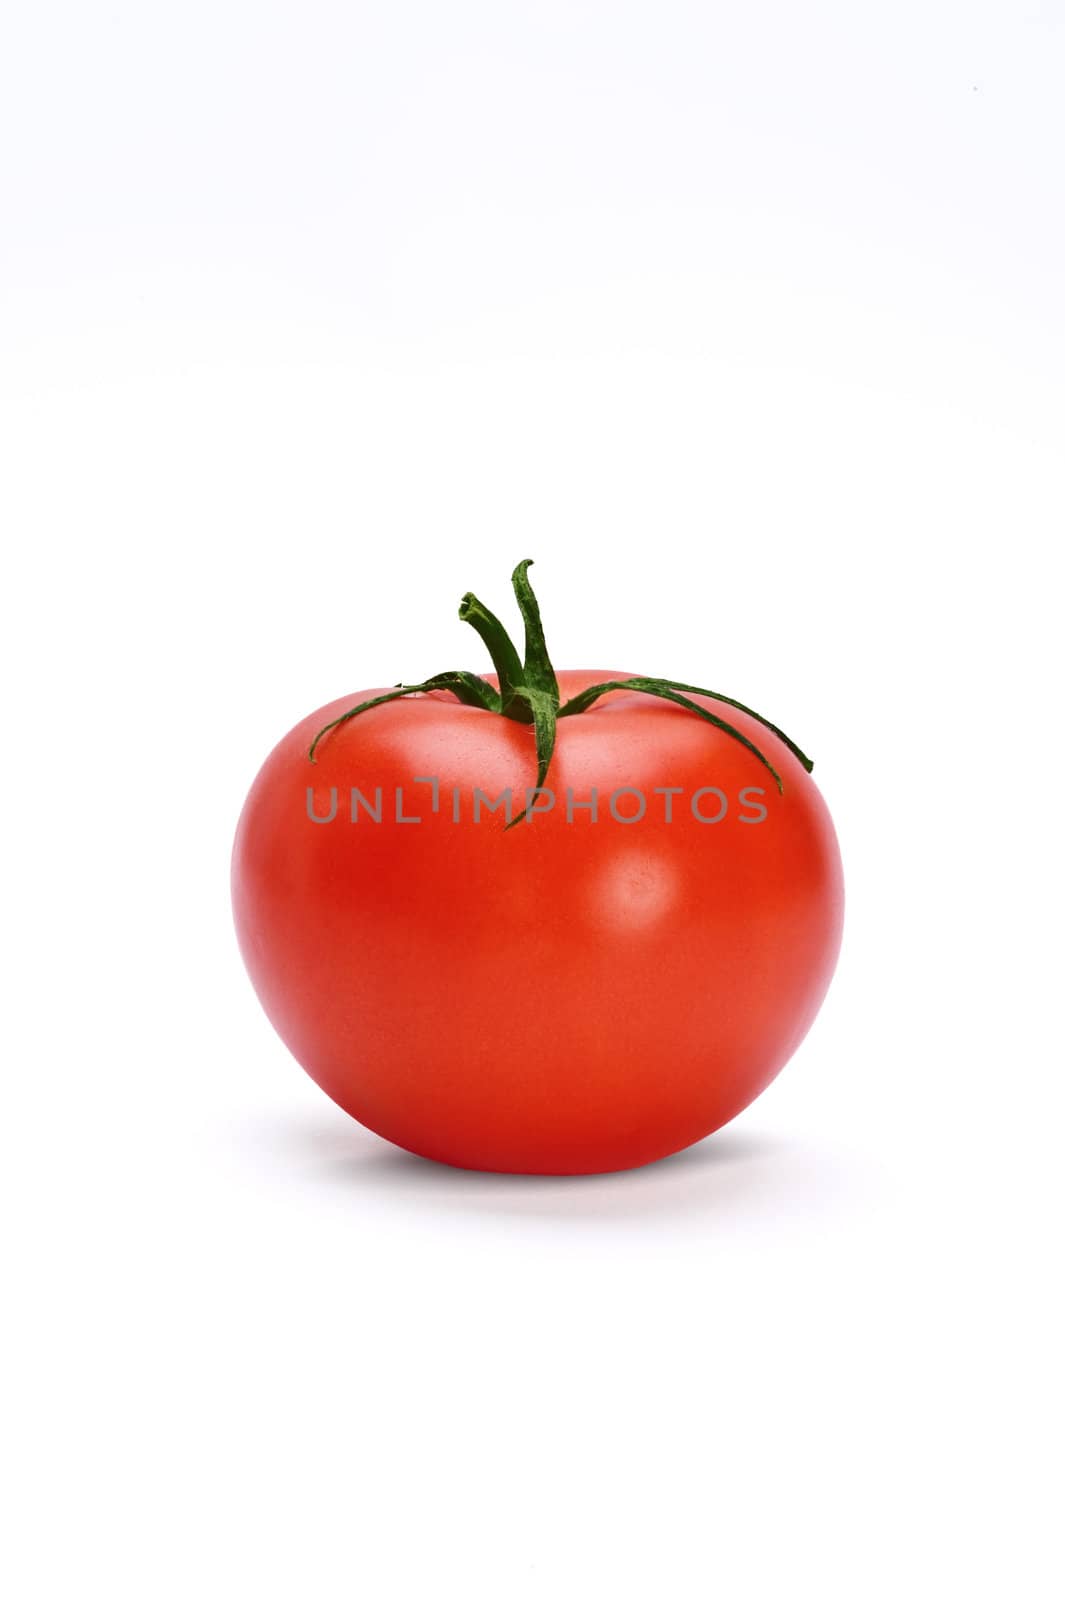 tomatoe by tiptoee